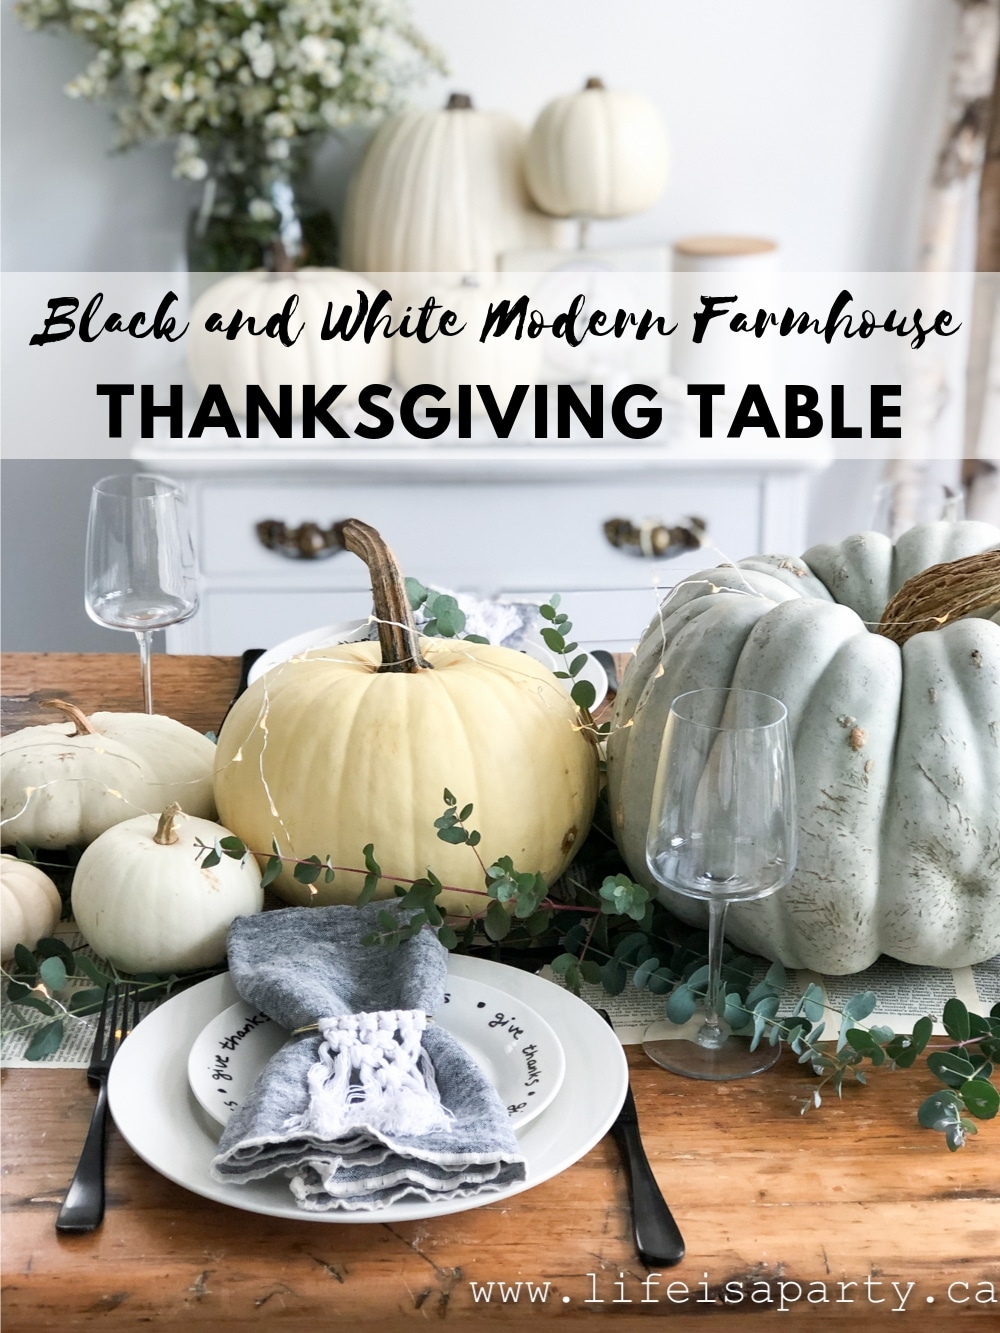 Black and White Modern Farmhouse Thanksgiving Table